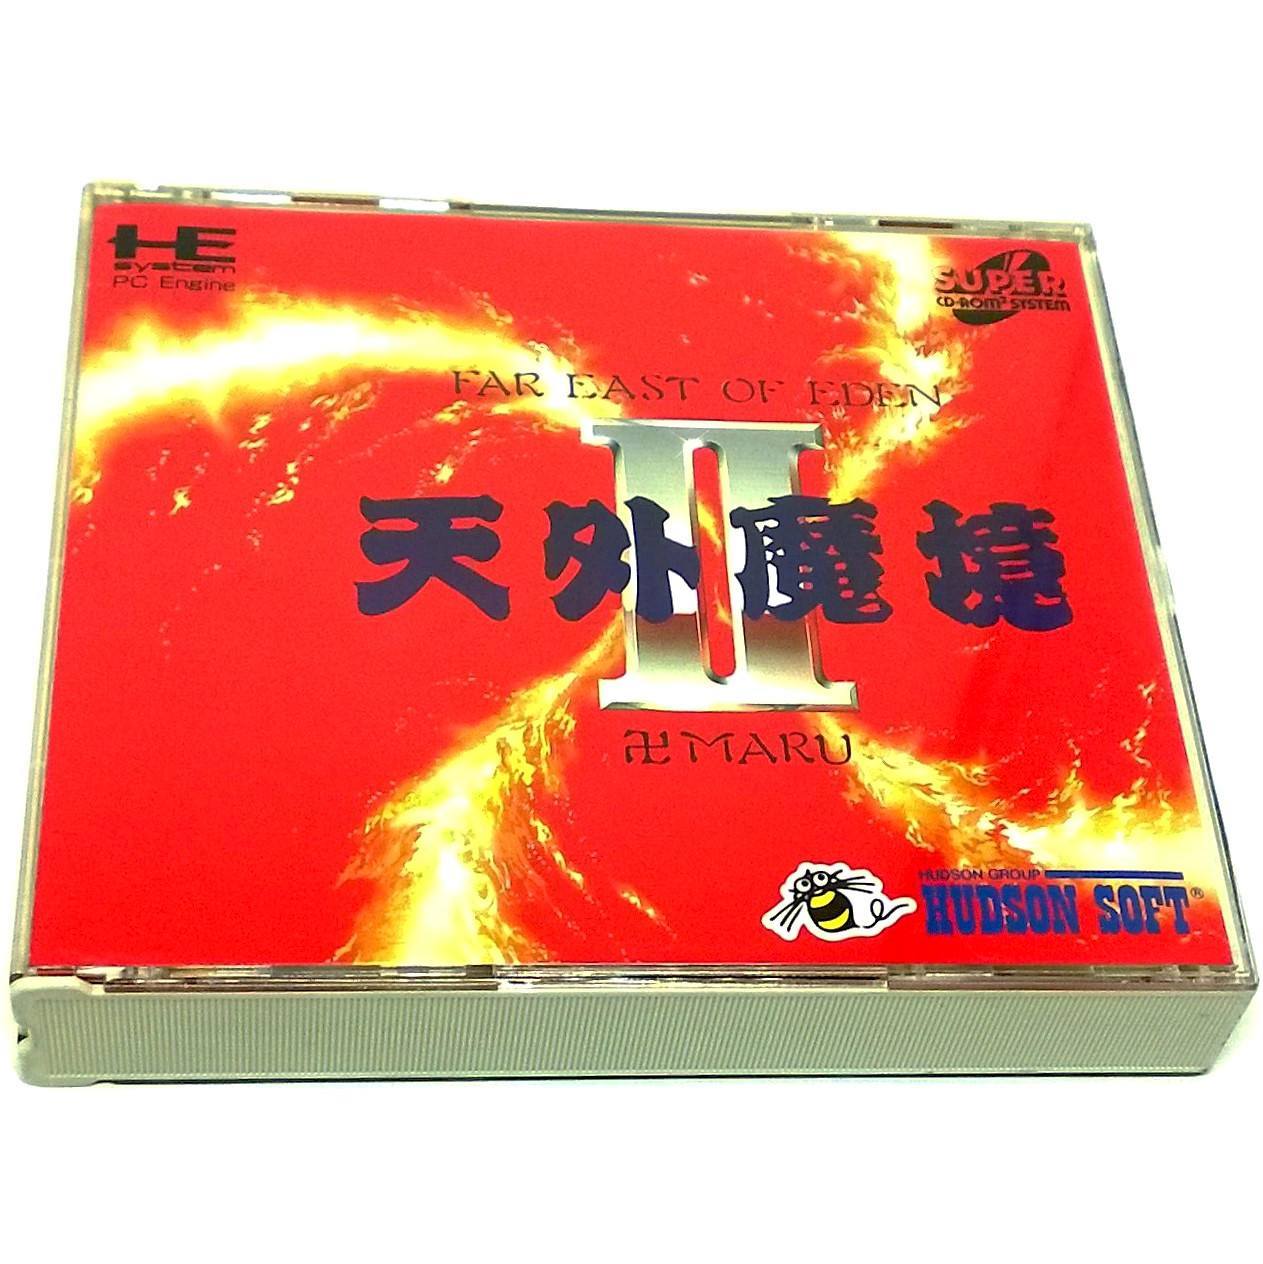 Far East of Eden II: Manji Maru for PC Engine (Super CD) - Front of case